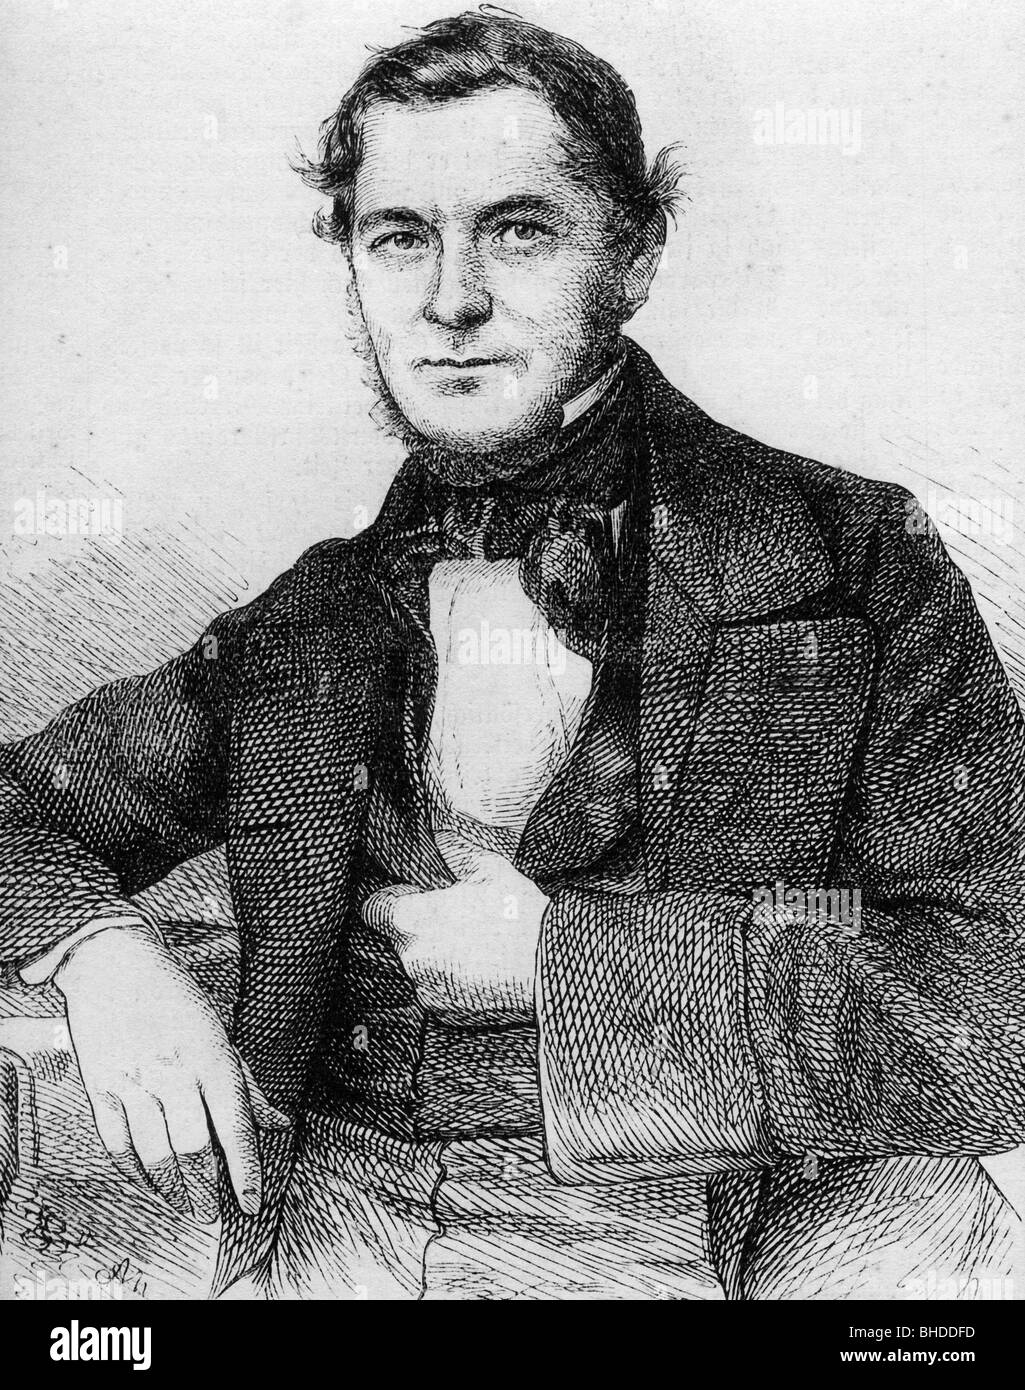 Bunsen, Robert Wilhelm, 30.3.1811 - 16.8.1899, German chemist, half length, wood engraving, 19th century, after photo by L. Meder, Heidelberg, Germany, , Stock Photo